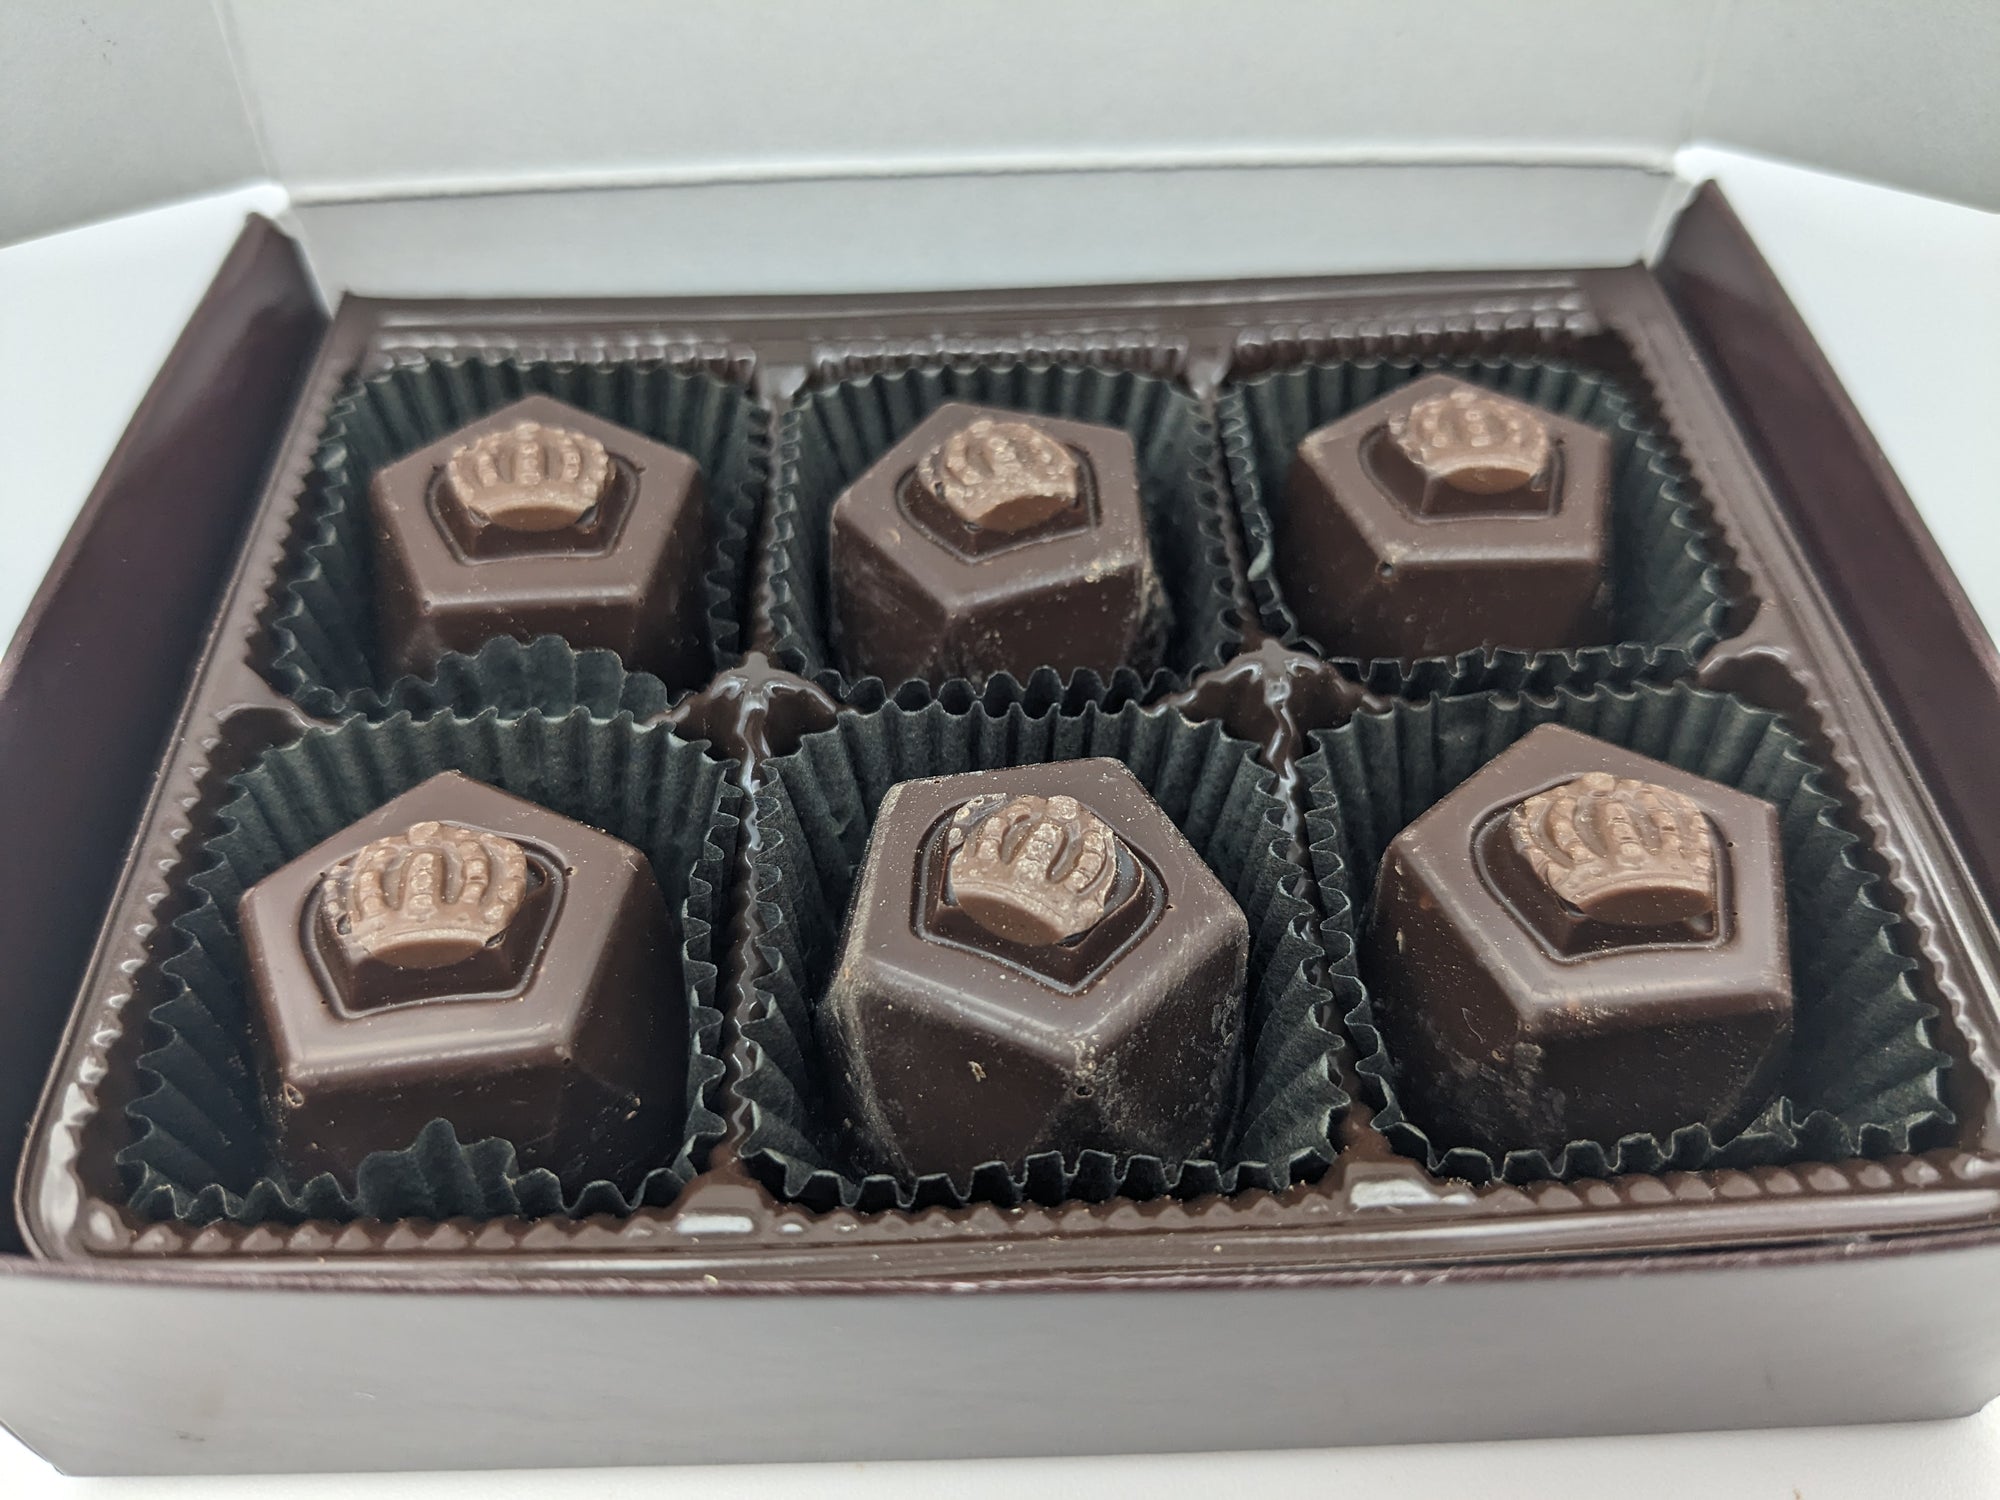 NSA Chocolate Ganache